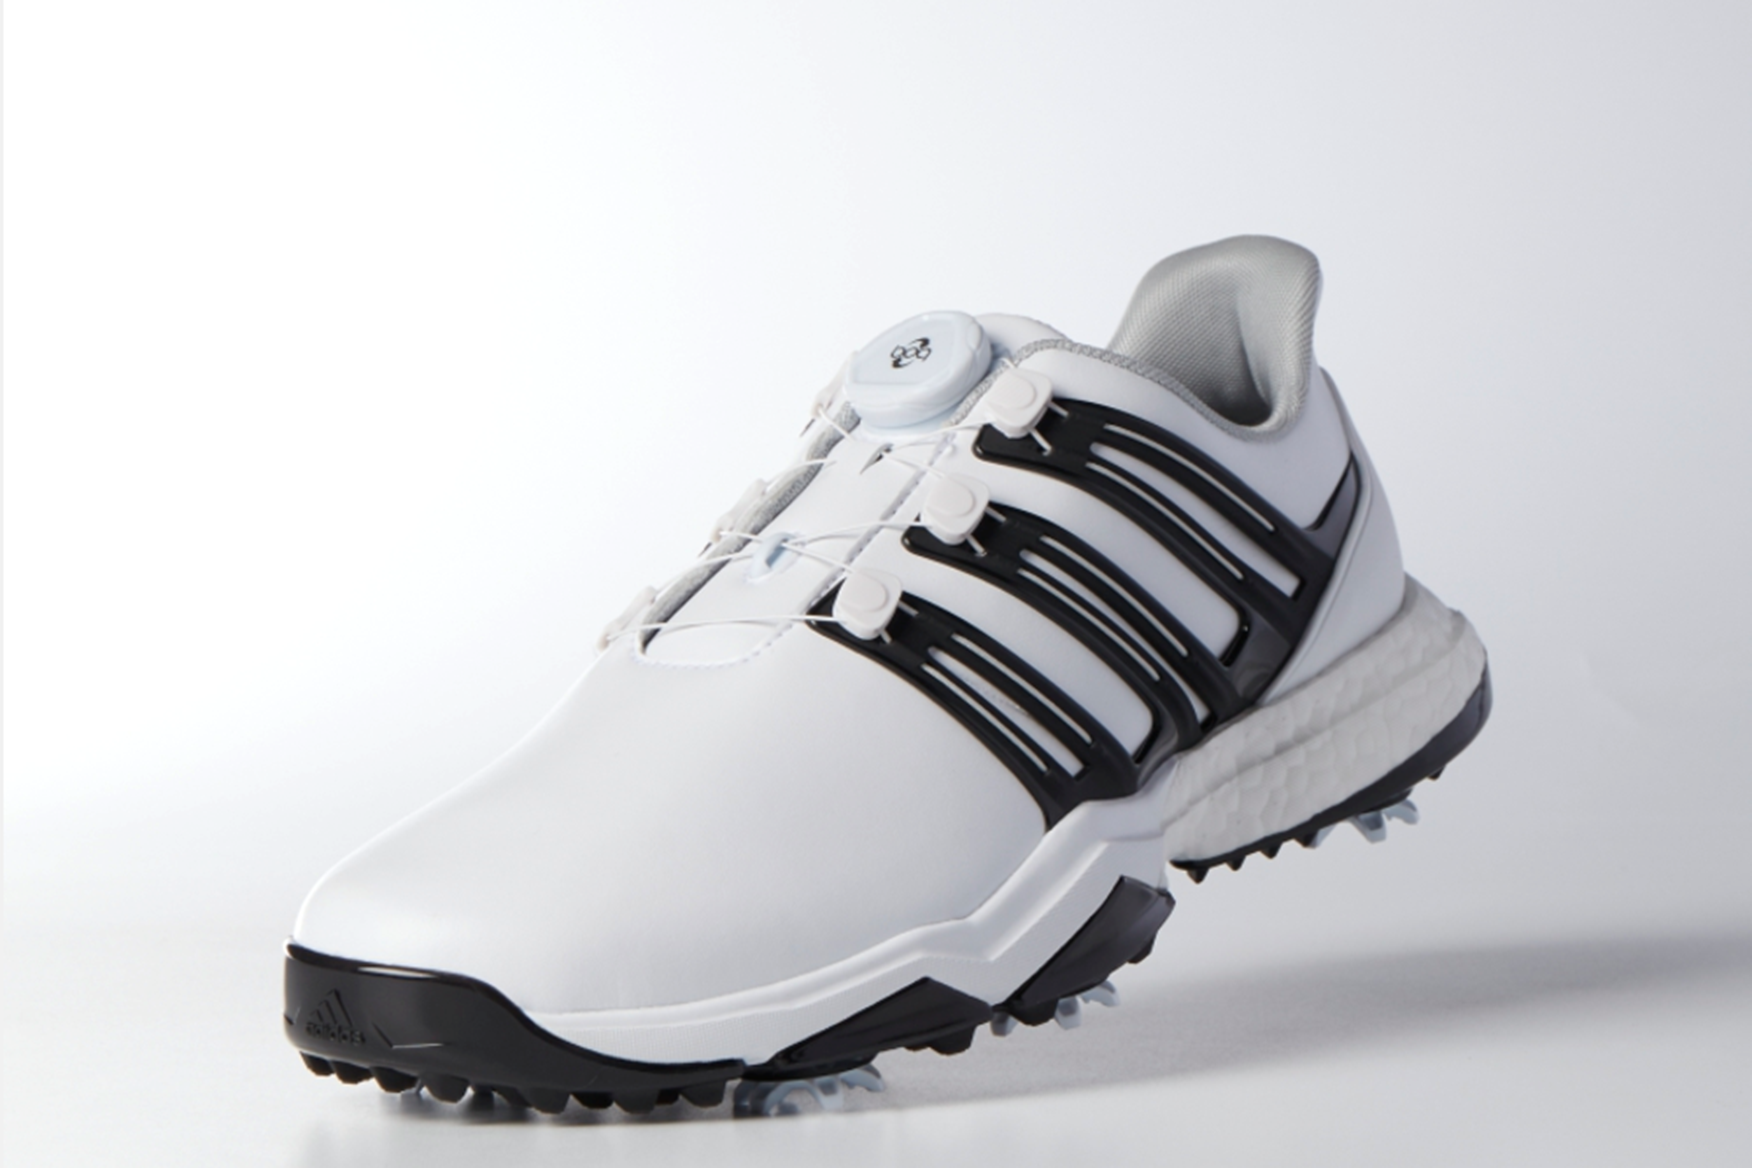 adidas boost boa golf shoes